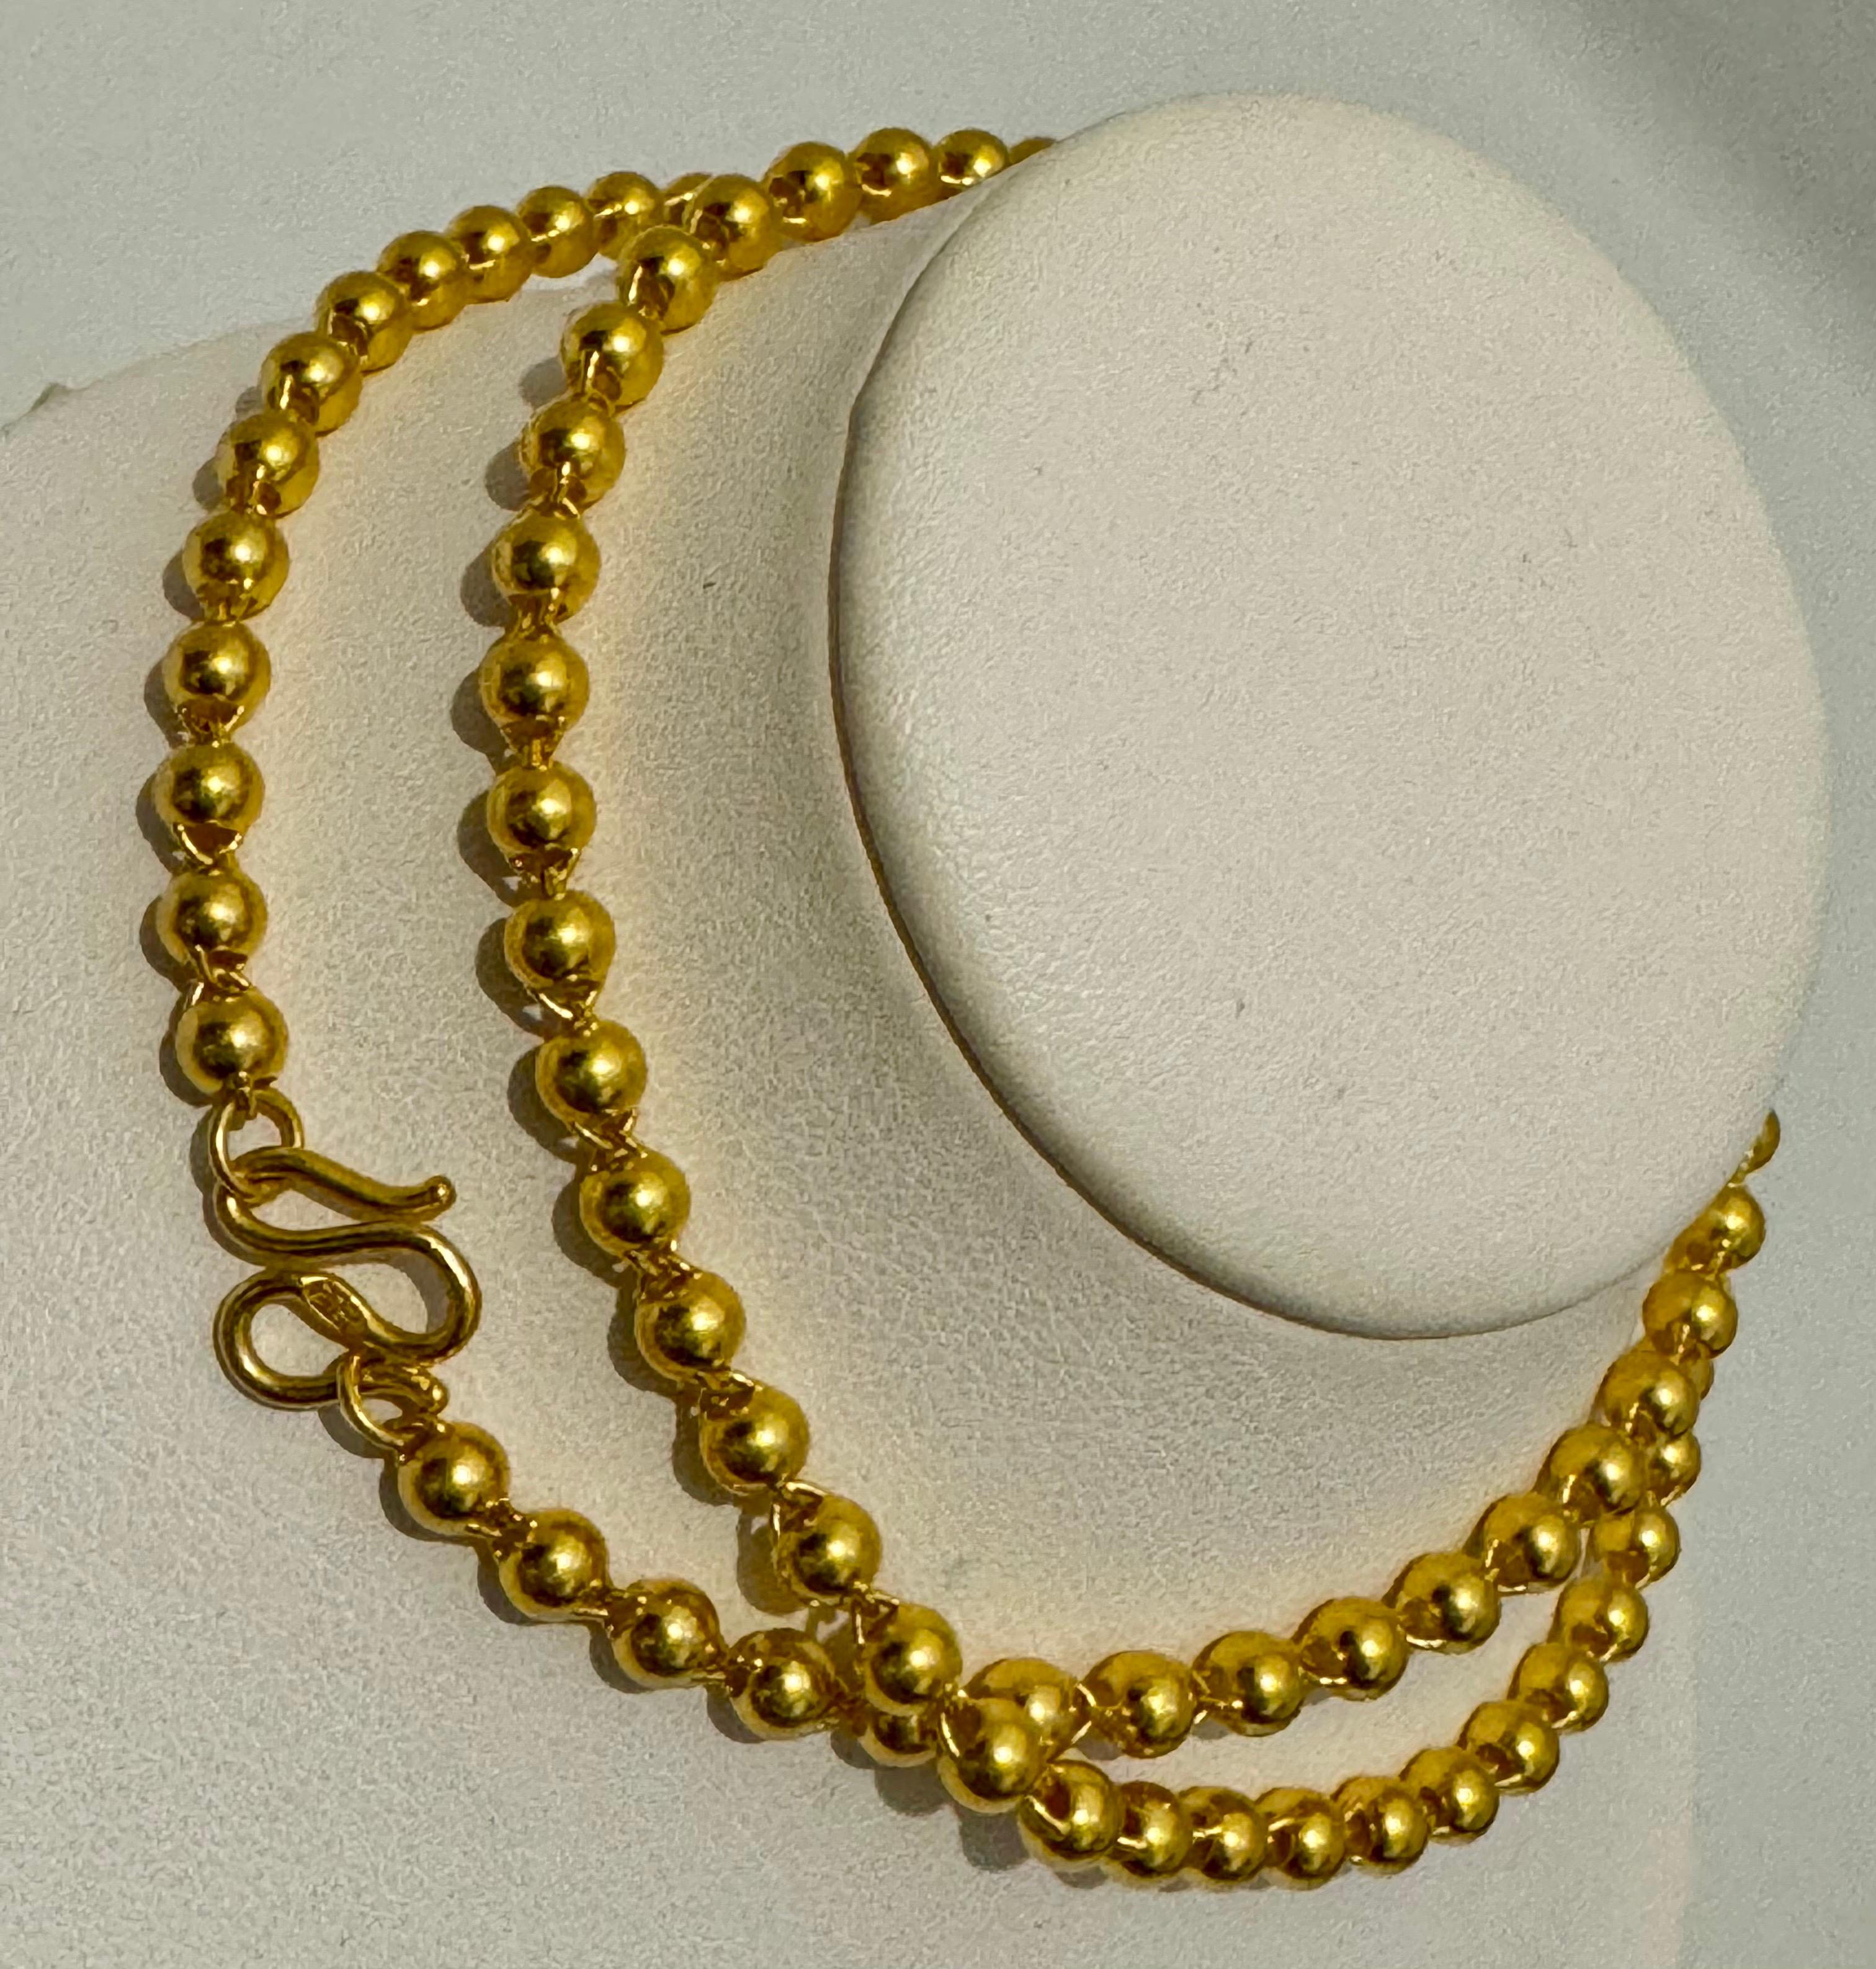 Vintage 19 Gm Pure 24 Karat Yellow Gold Handmade Ball Chain 17 inch long 6